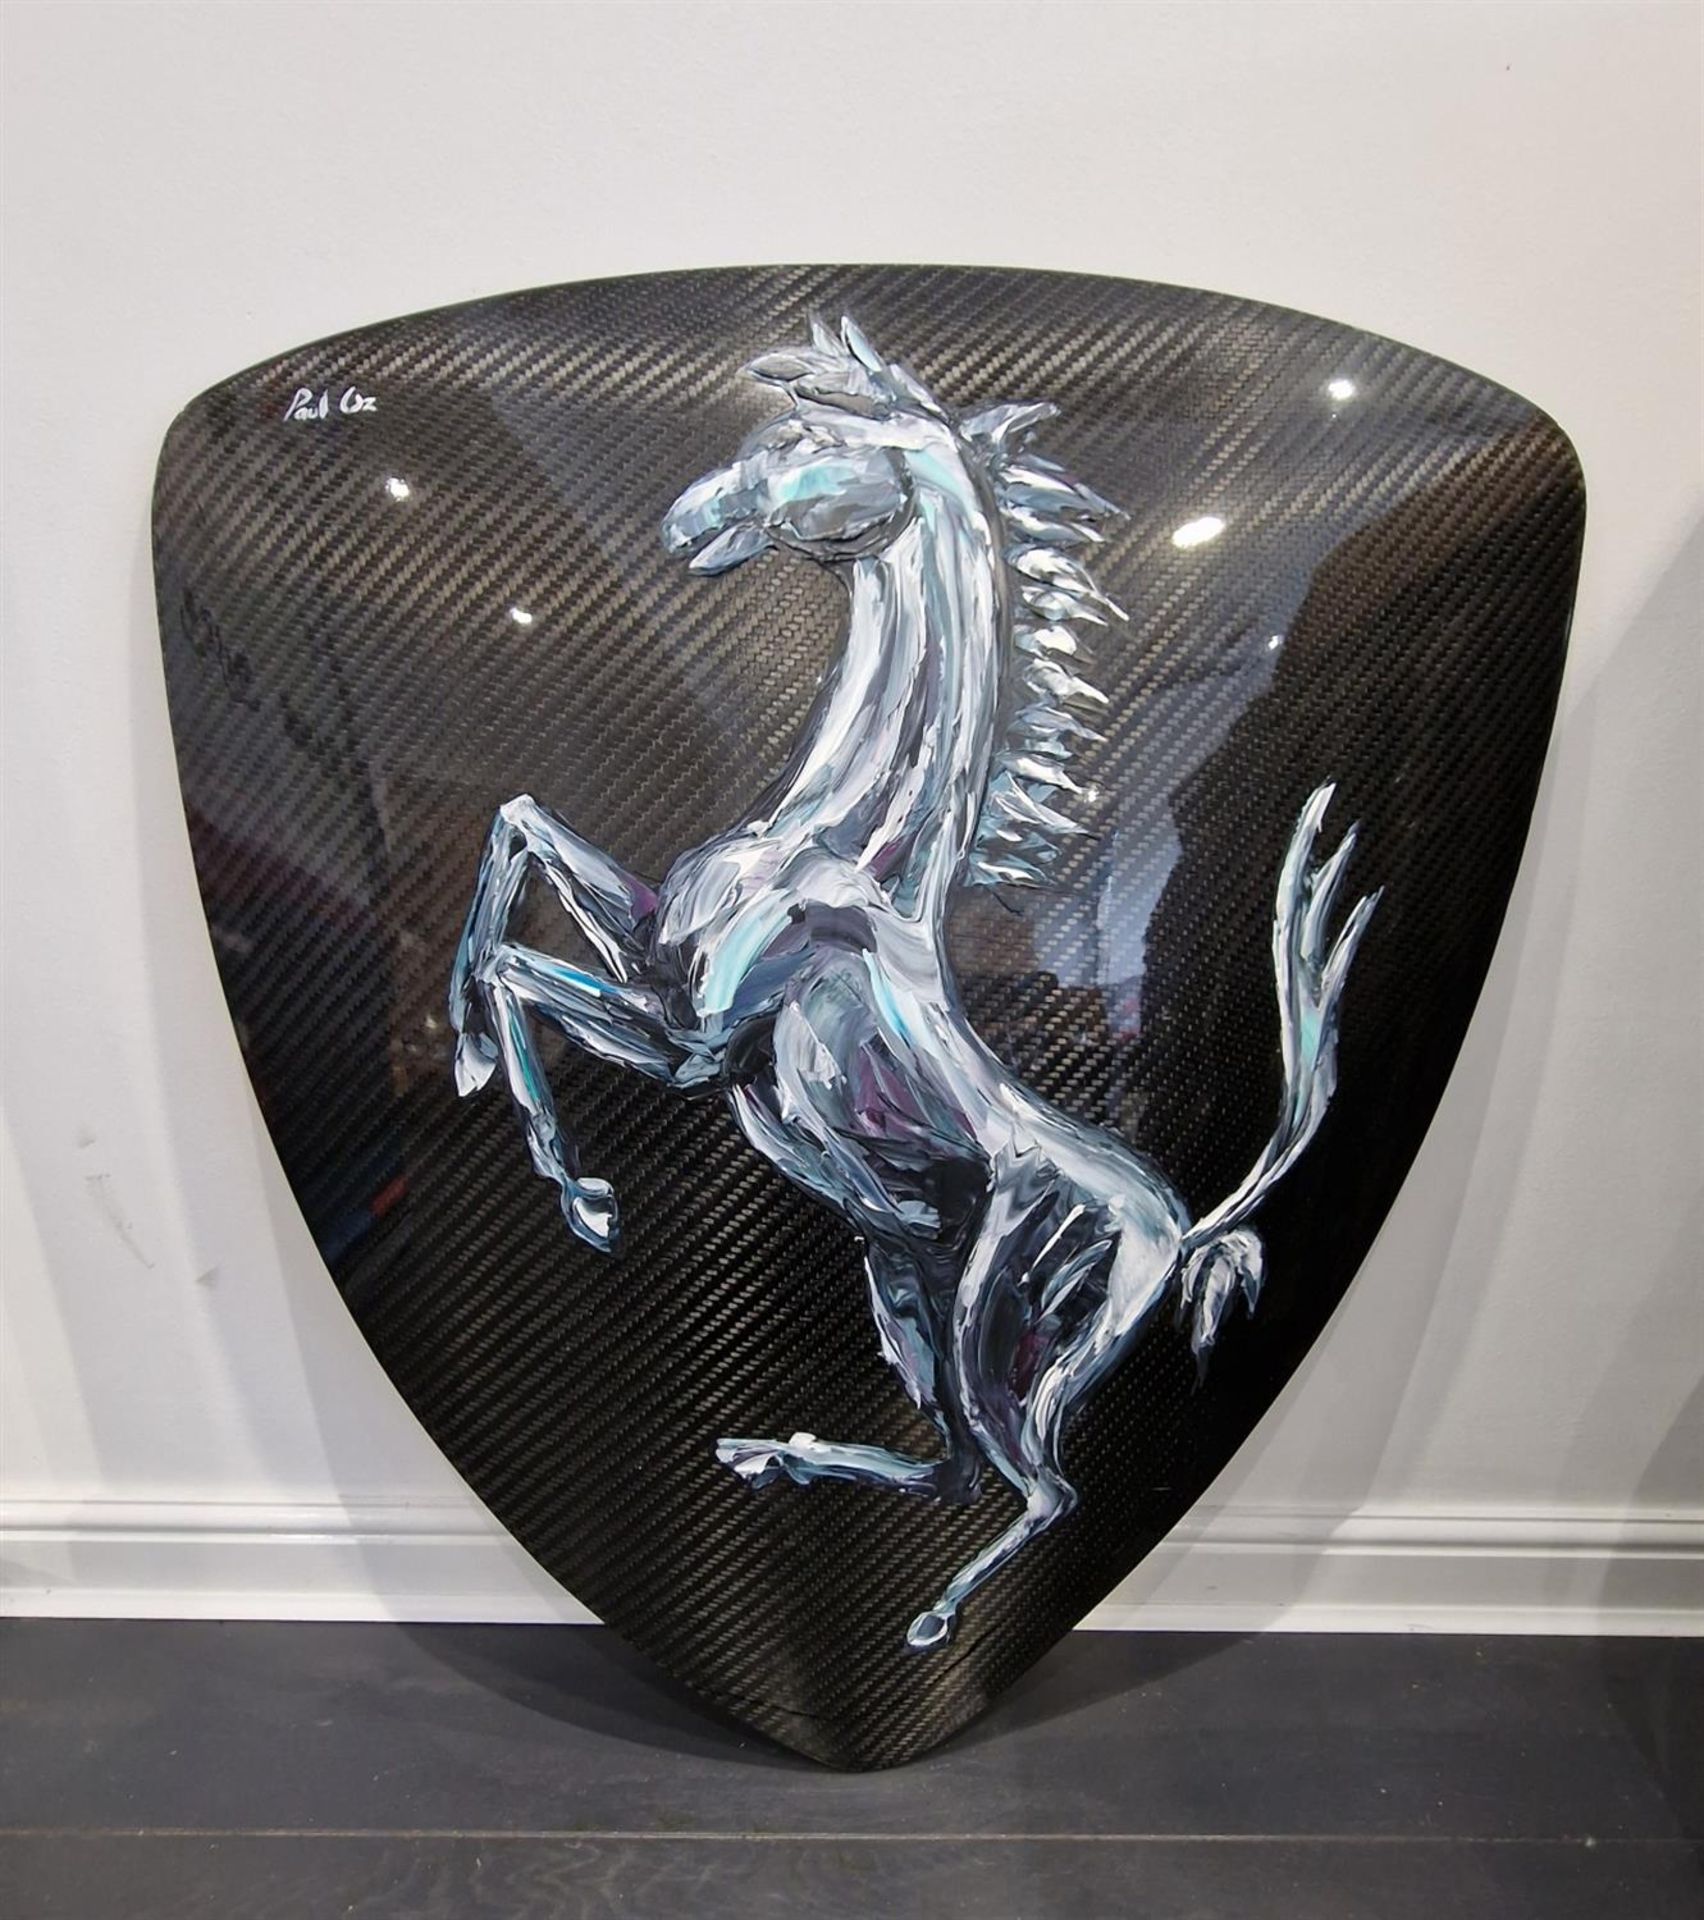 Original Prancing Horse on Carbon Fibre Sheild Artwork by Paul Oz - Image 2 of 7